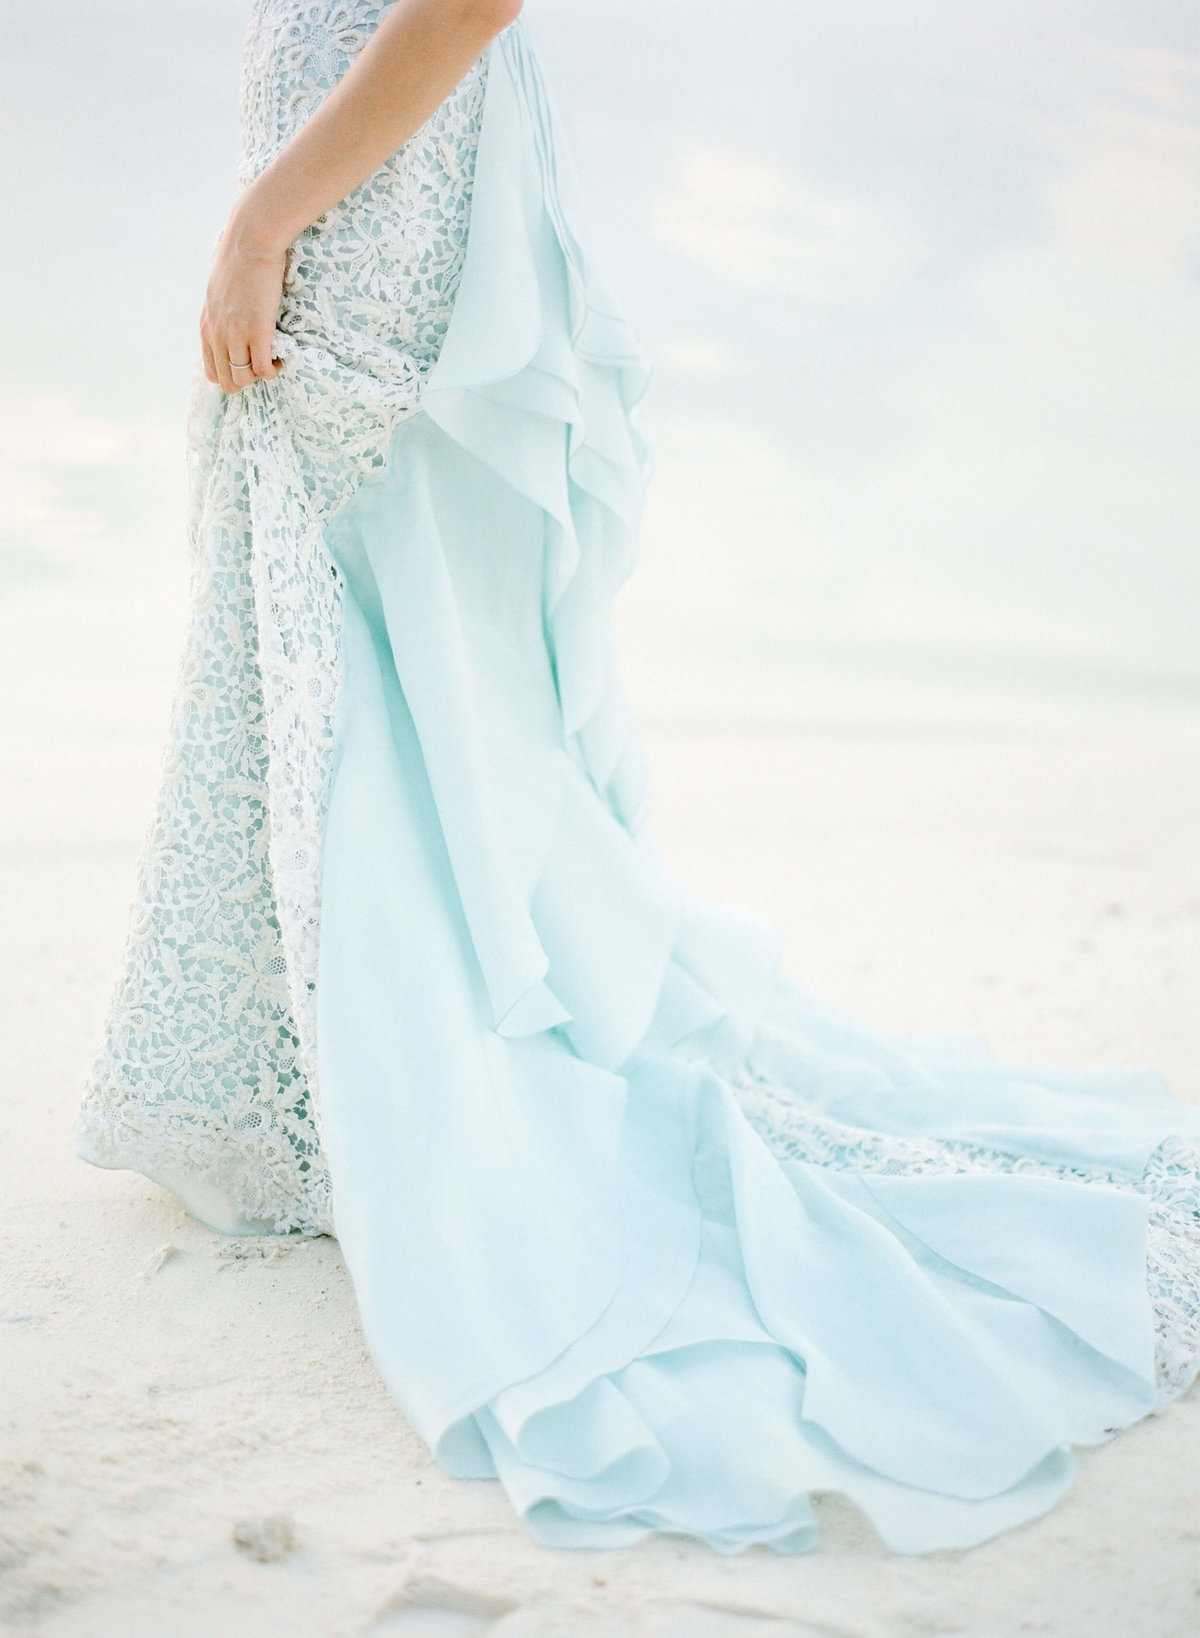 15-KTMerry-weddings-OscardelaRenta-gown-blue